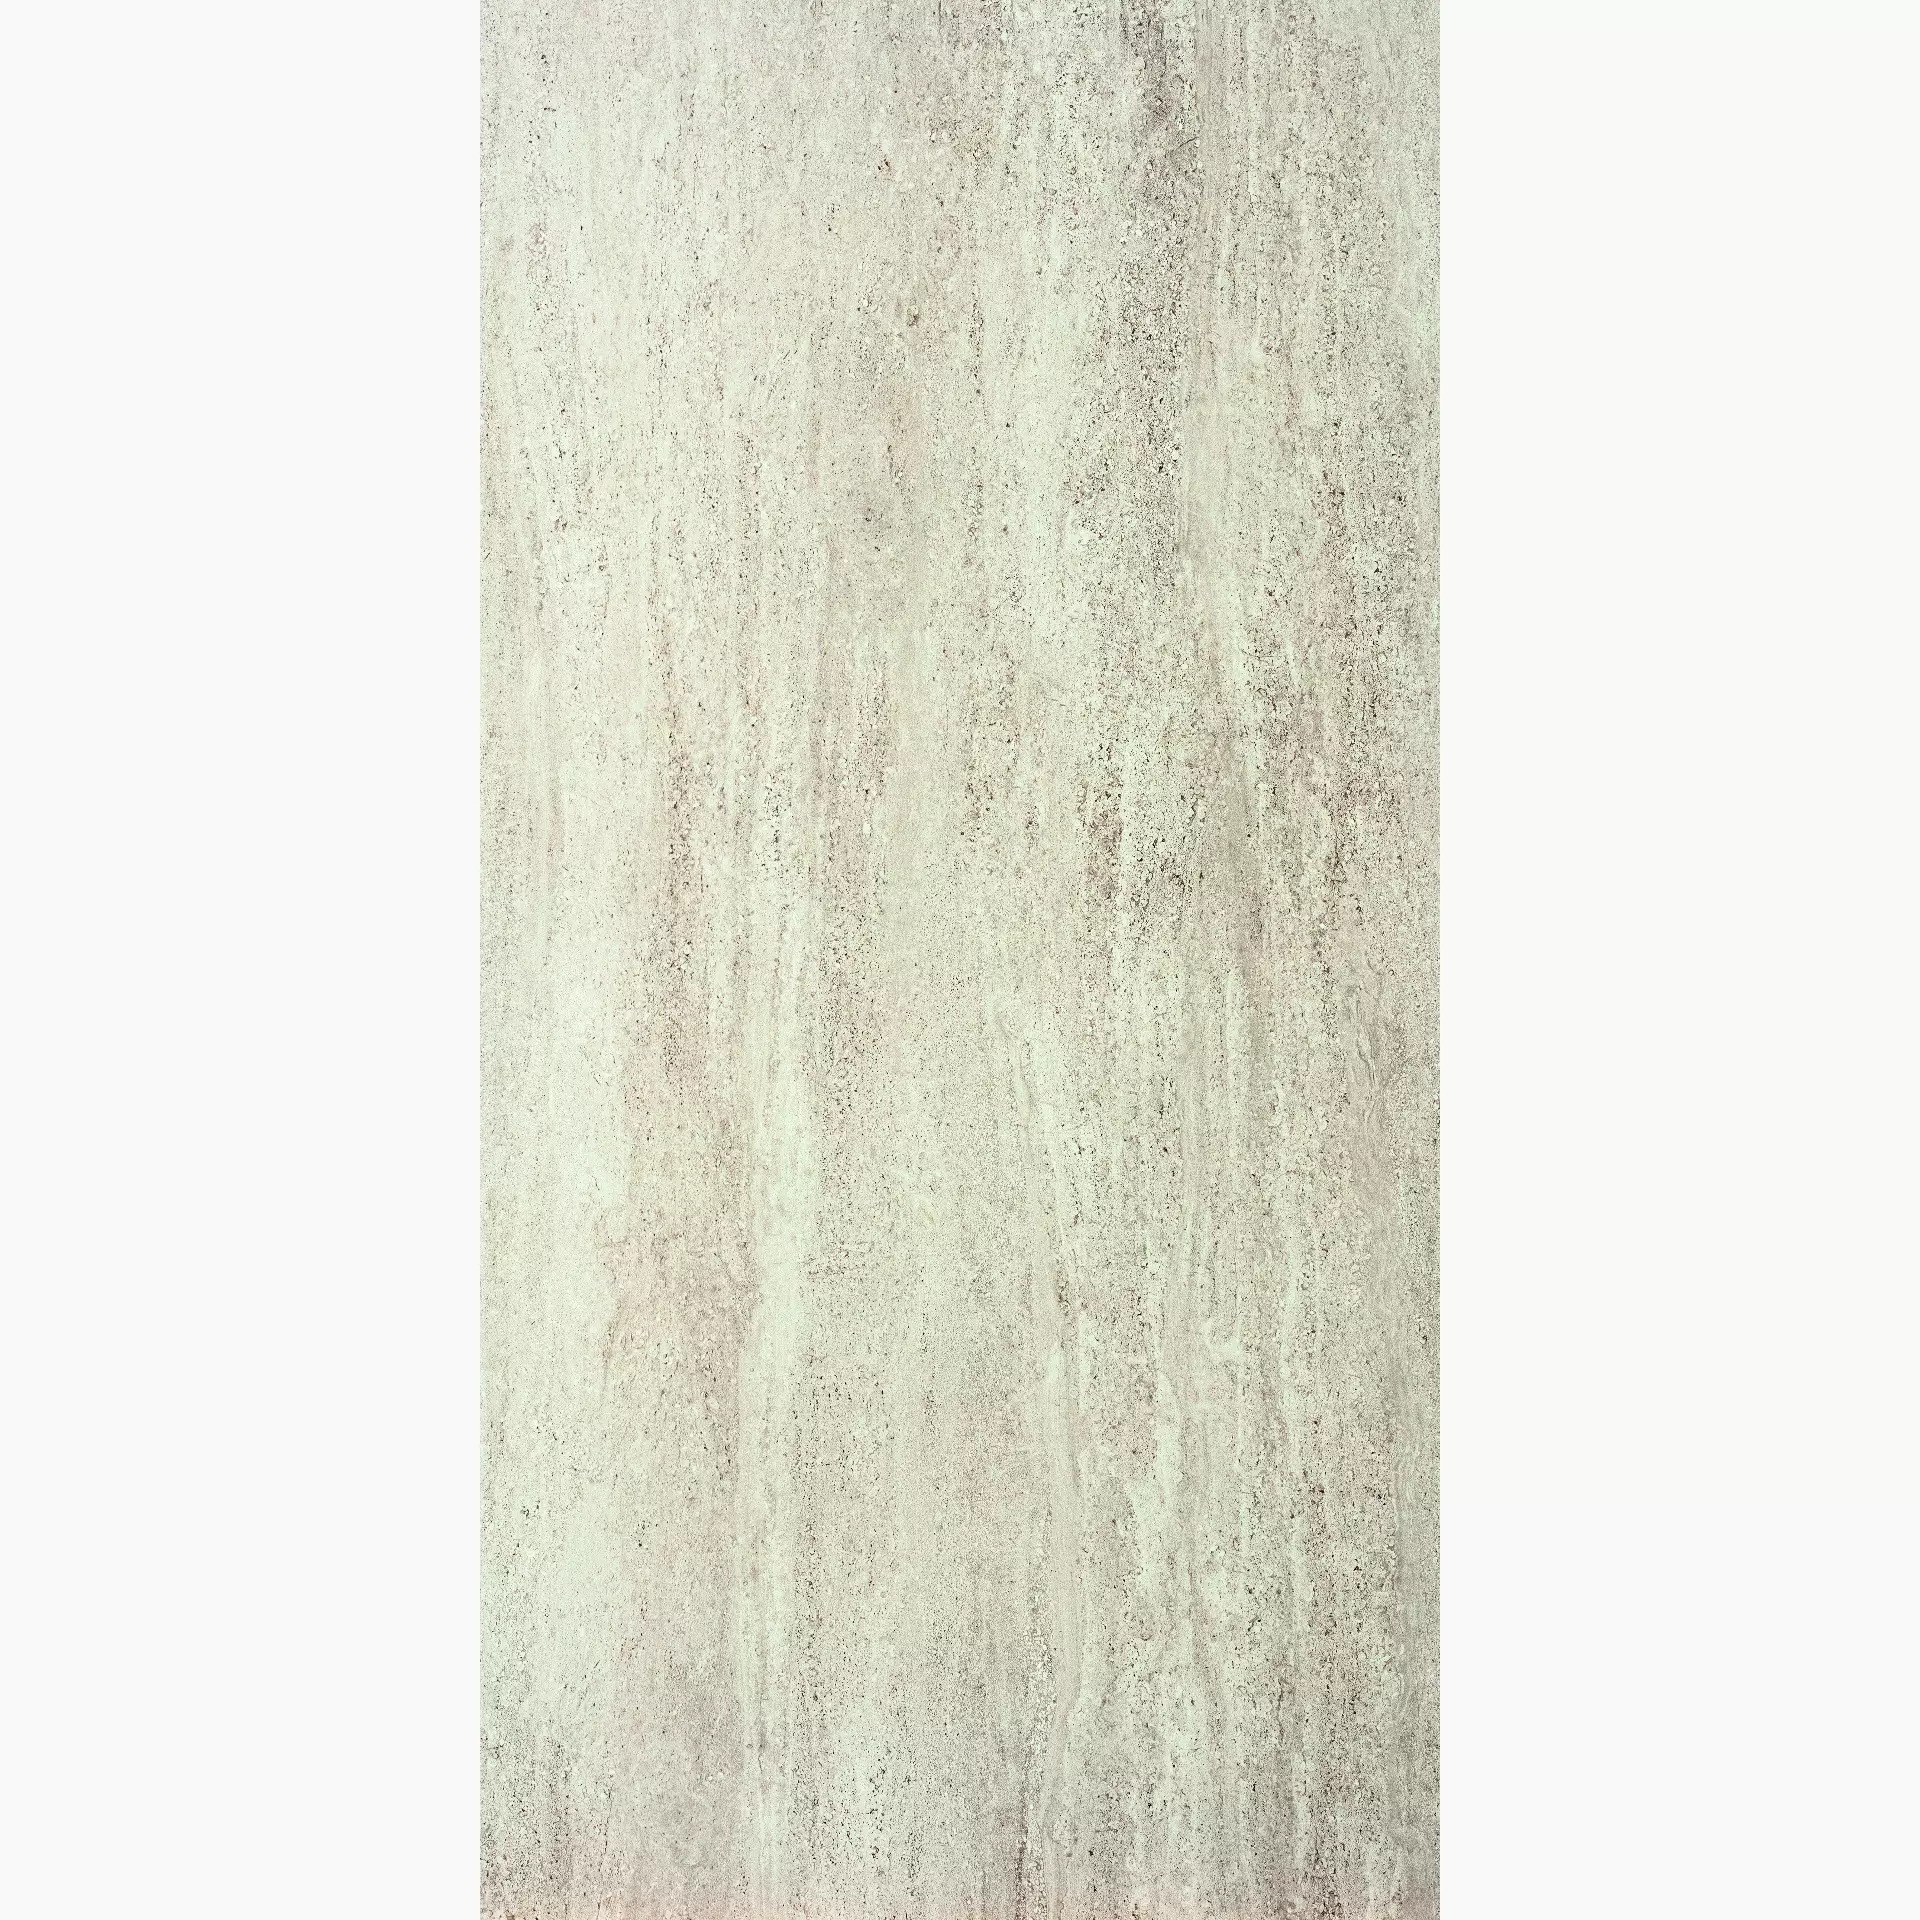 Serenissima Travertini Due Bianco Naturale 1072920 60x120cm rectified 9,5mm